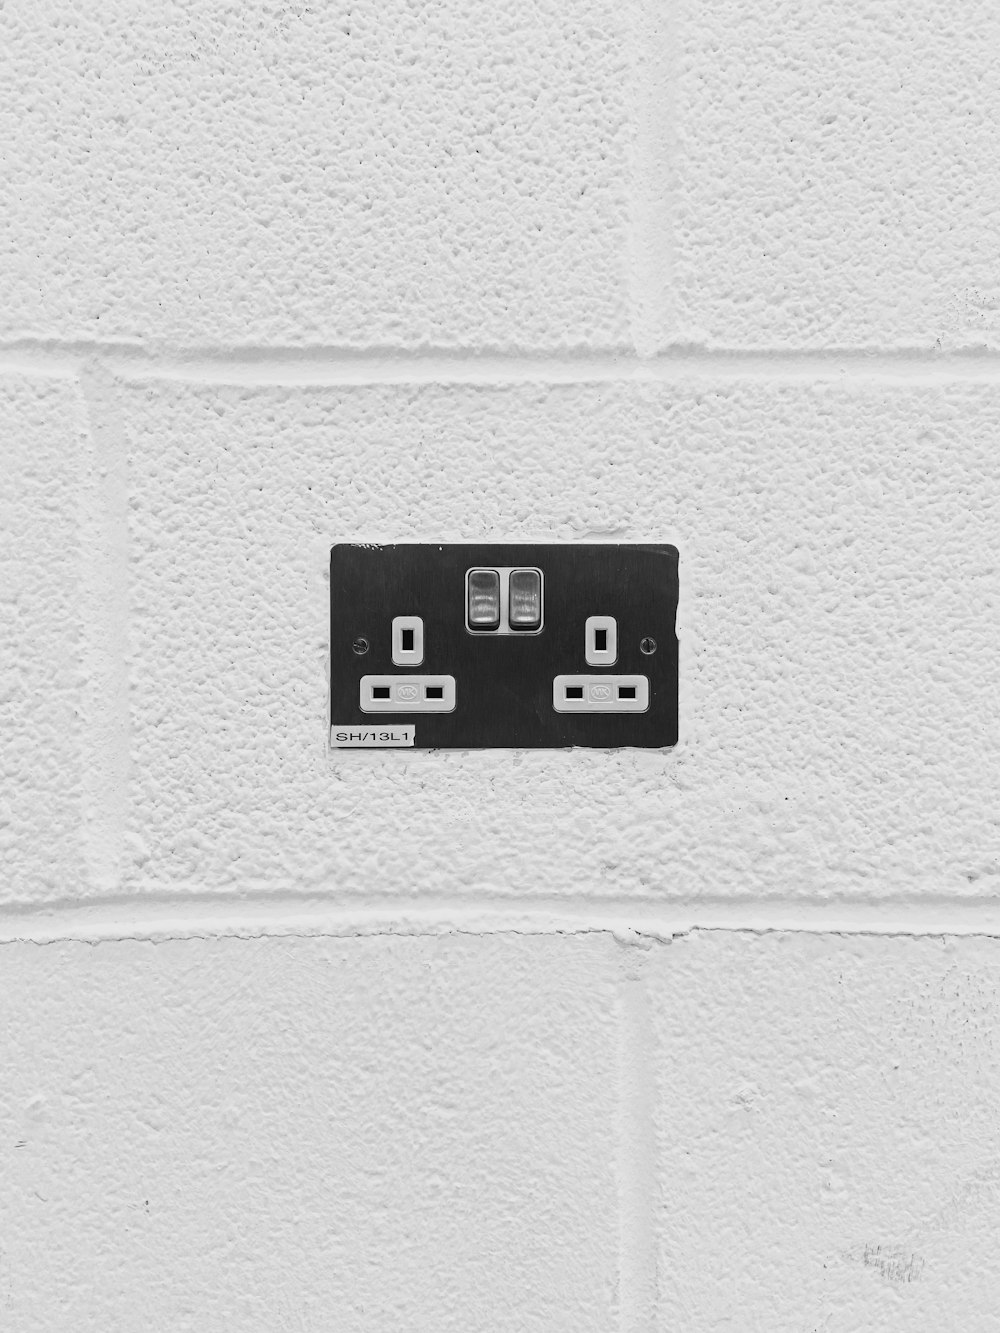 interruptor de parede preto e branco